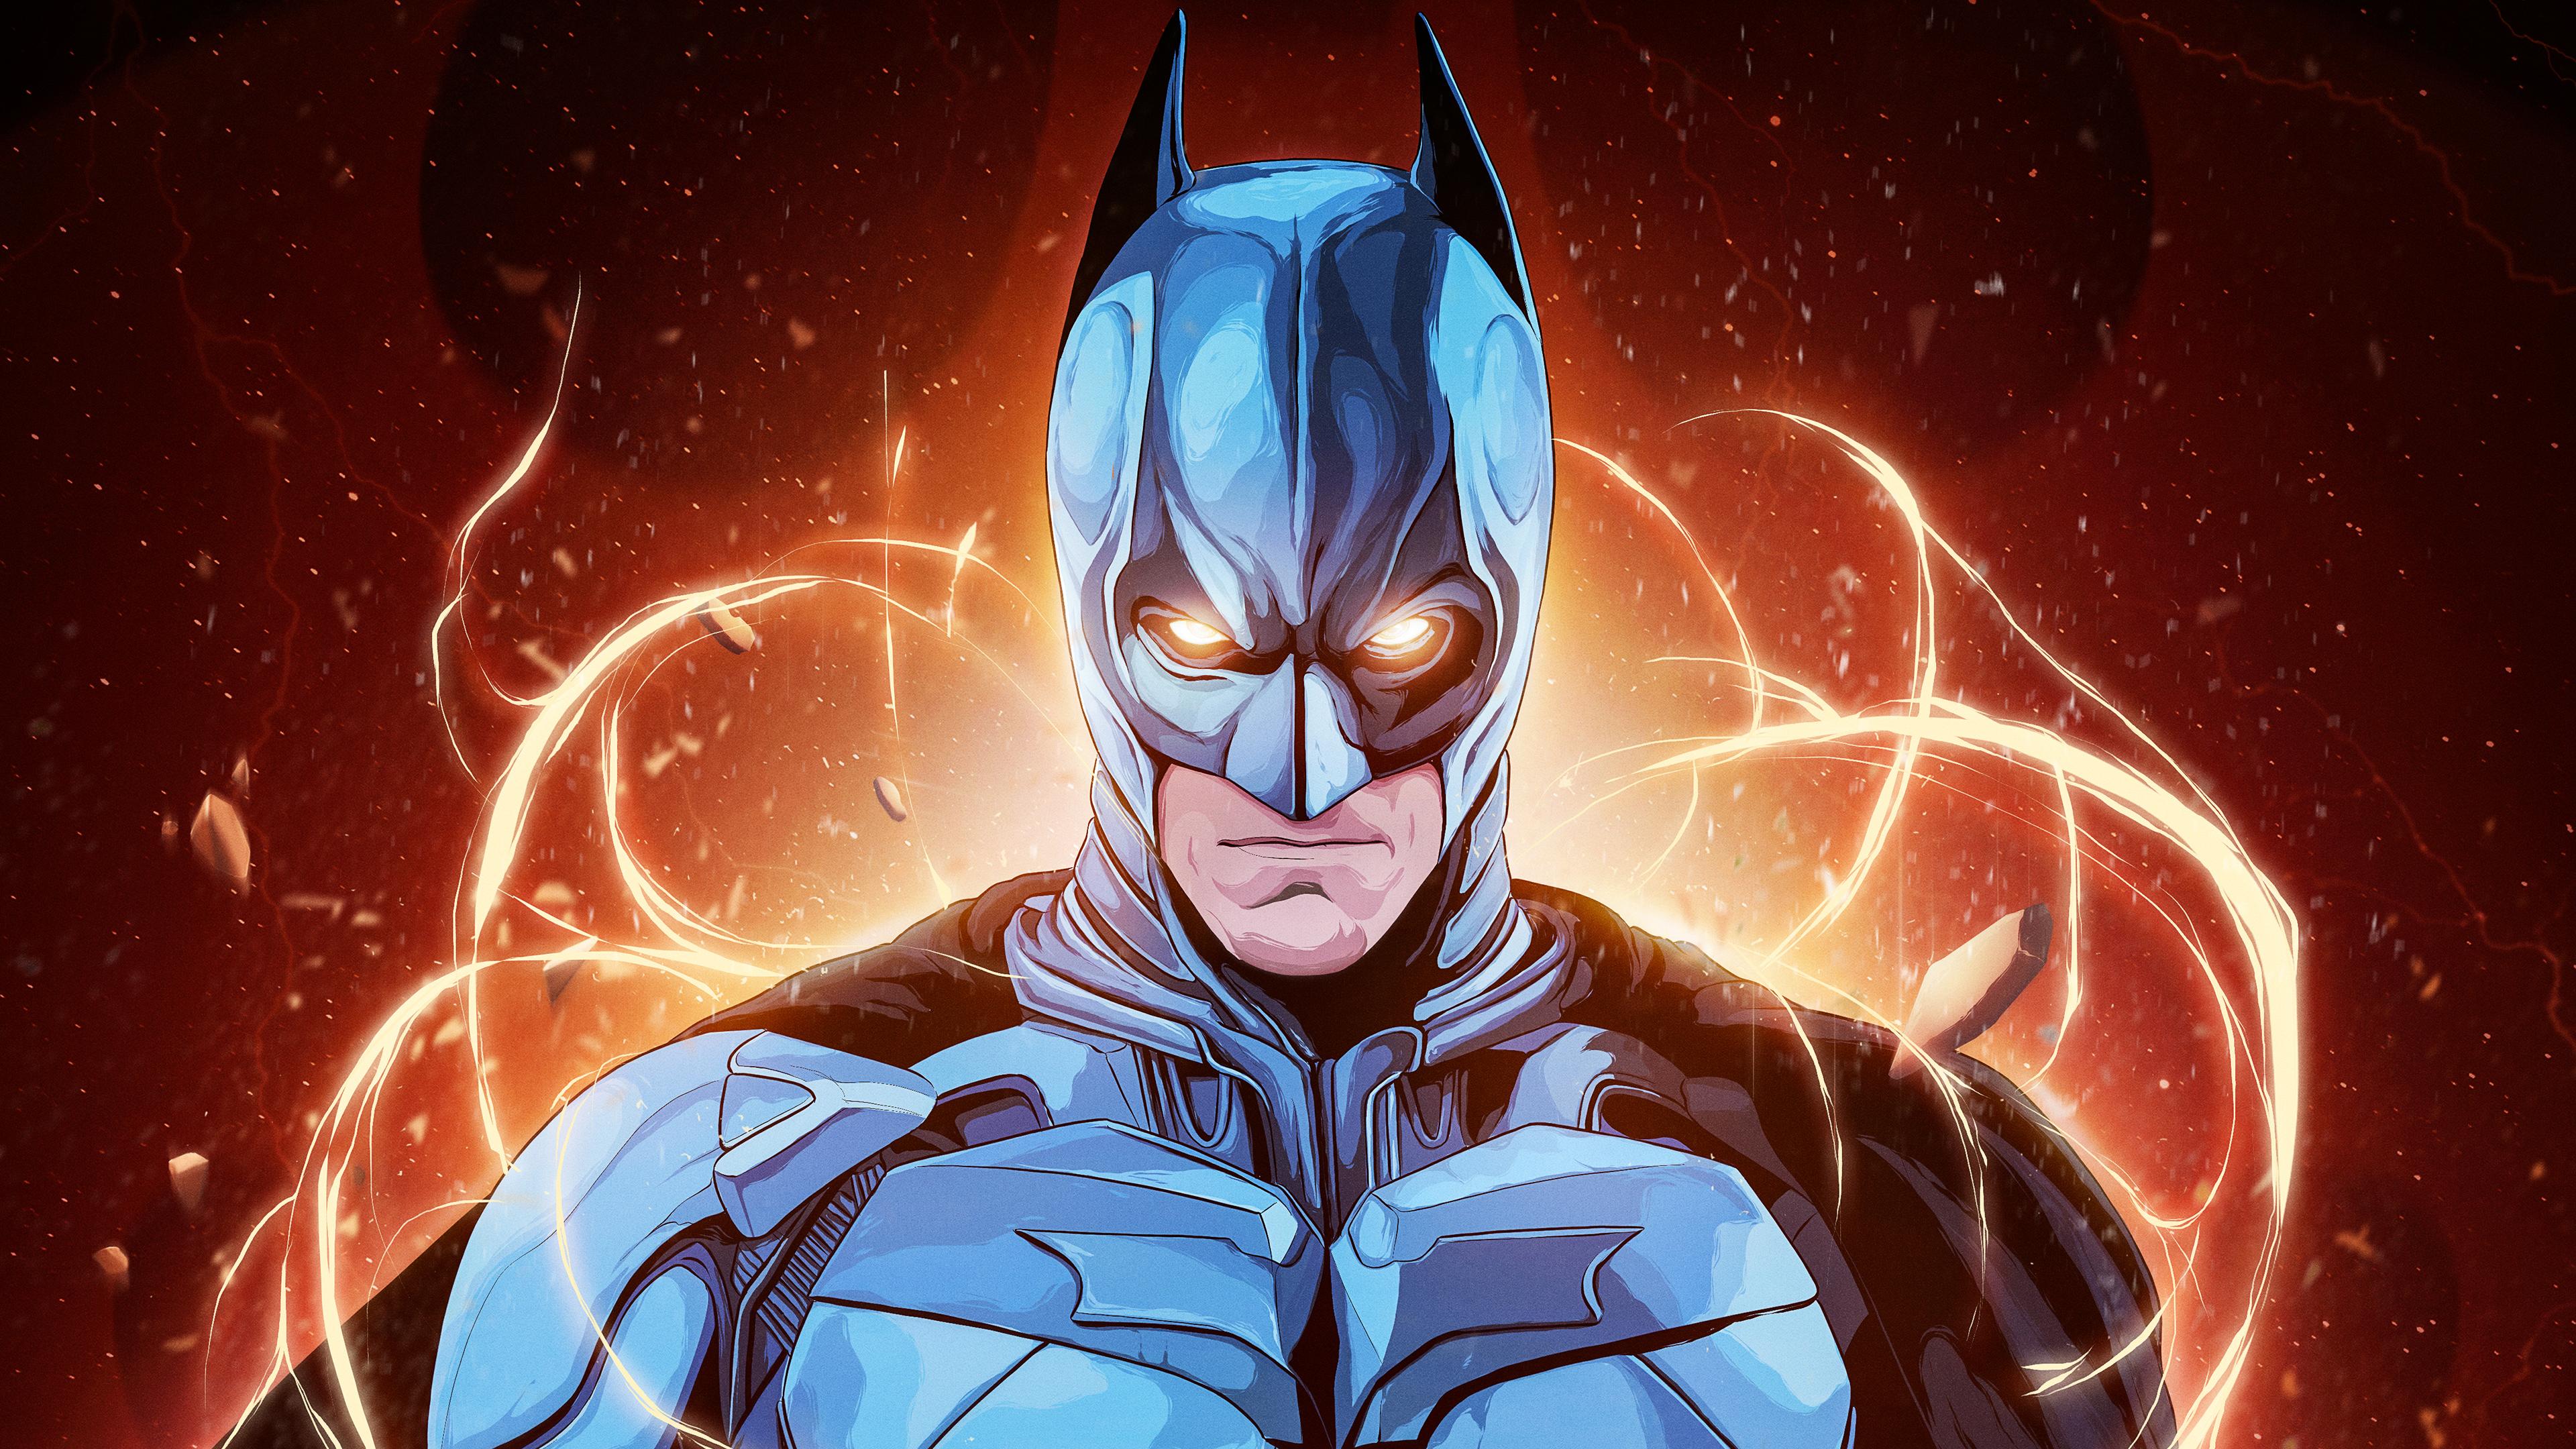 Batman The Dark Knight Illustration, HD Superheroes, 4k